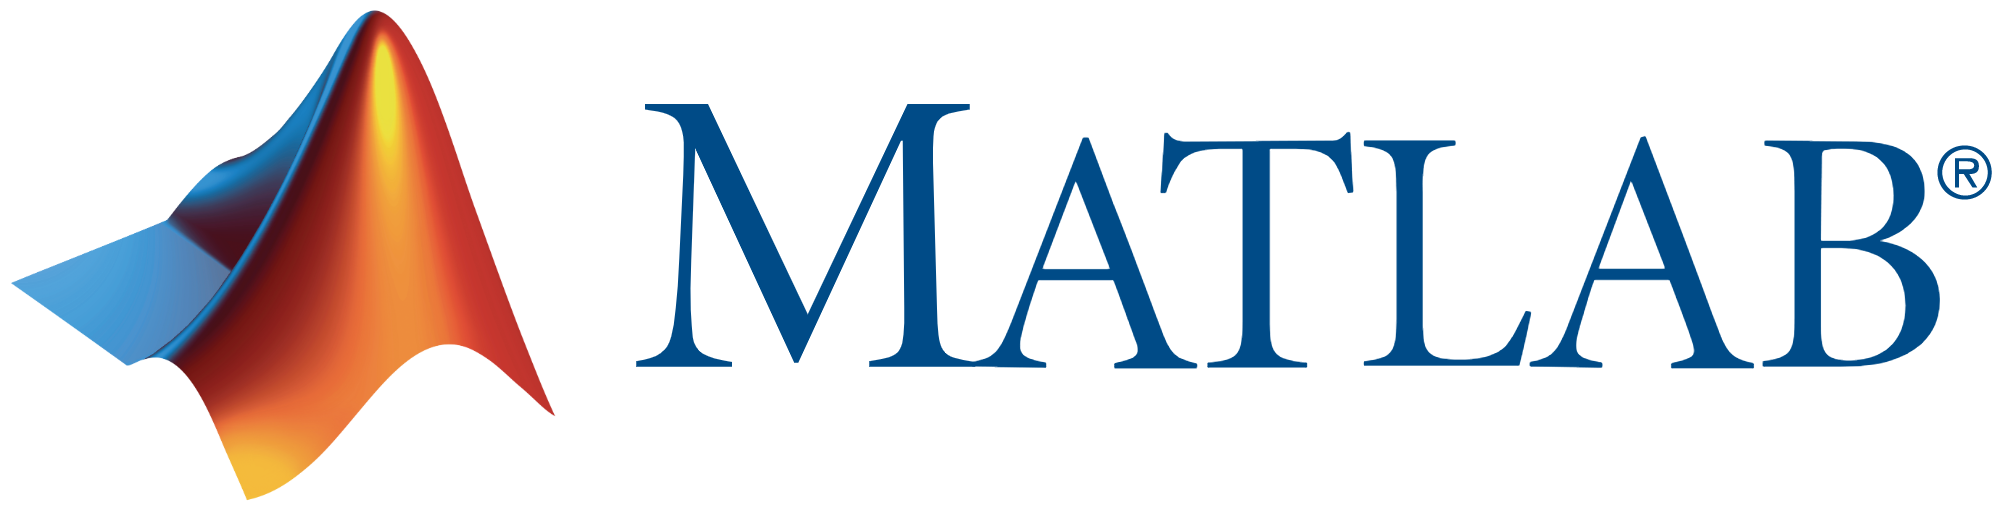 MATLAB logo